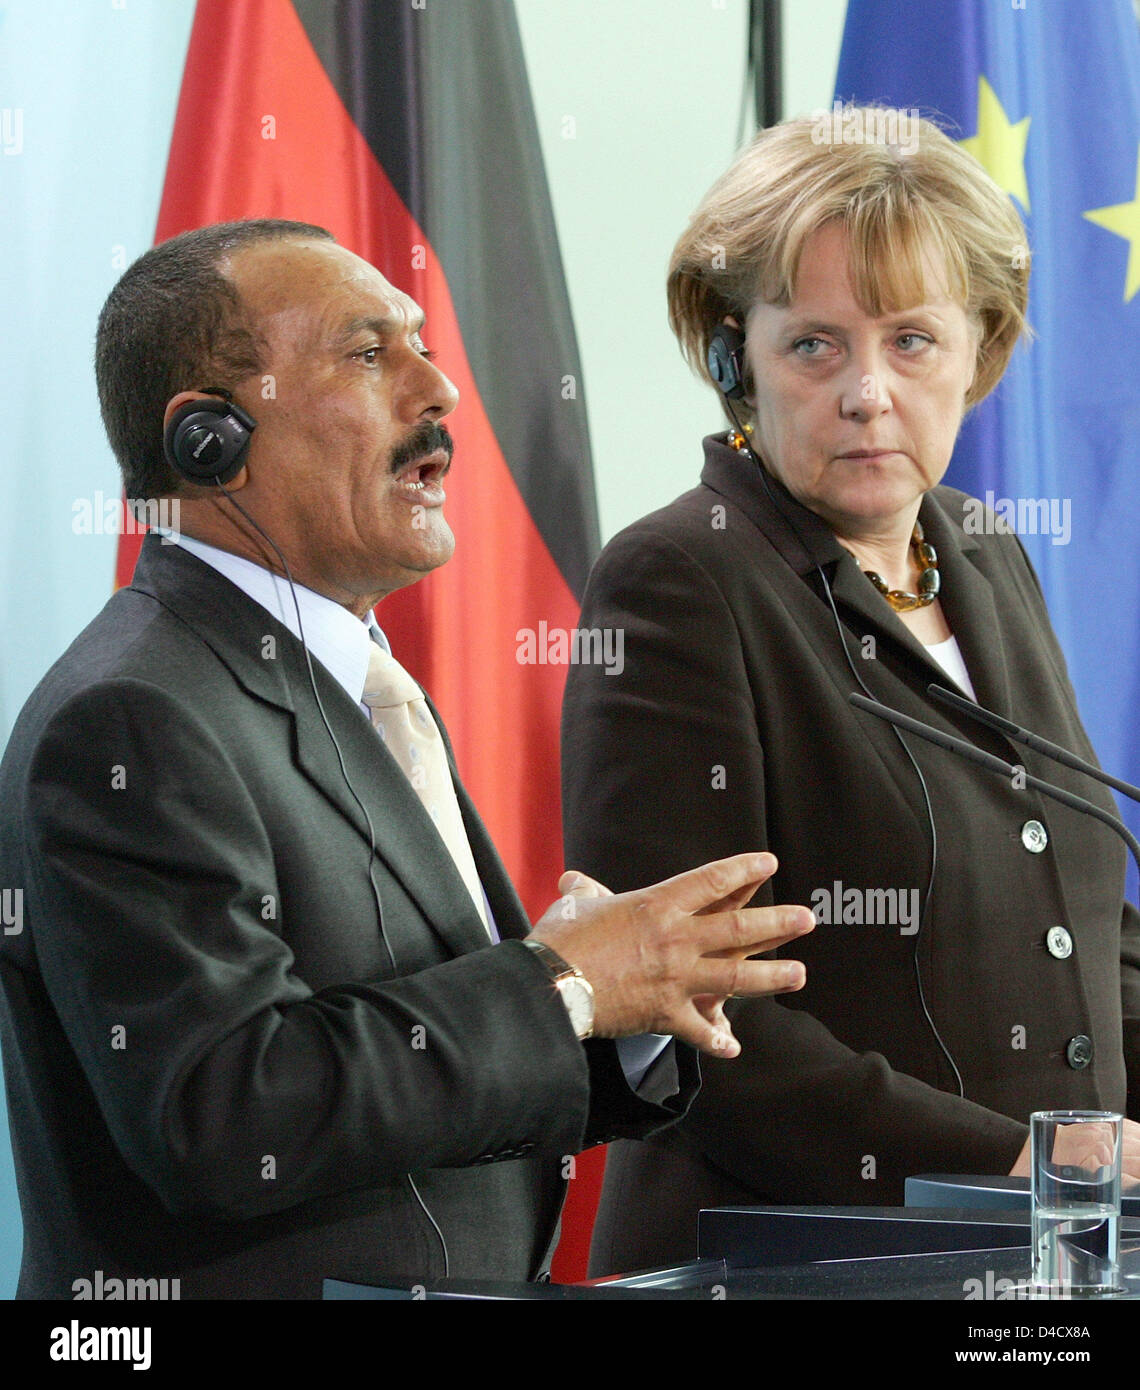 German Chancellor Angela Merkel (R) and Yemeni President Ali Abdallah Saleh (L) pictured during a press conference in Berlin, Germany, 27 February 2008. Photo: Gero Breloer Stock Photo